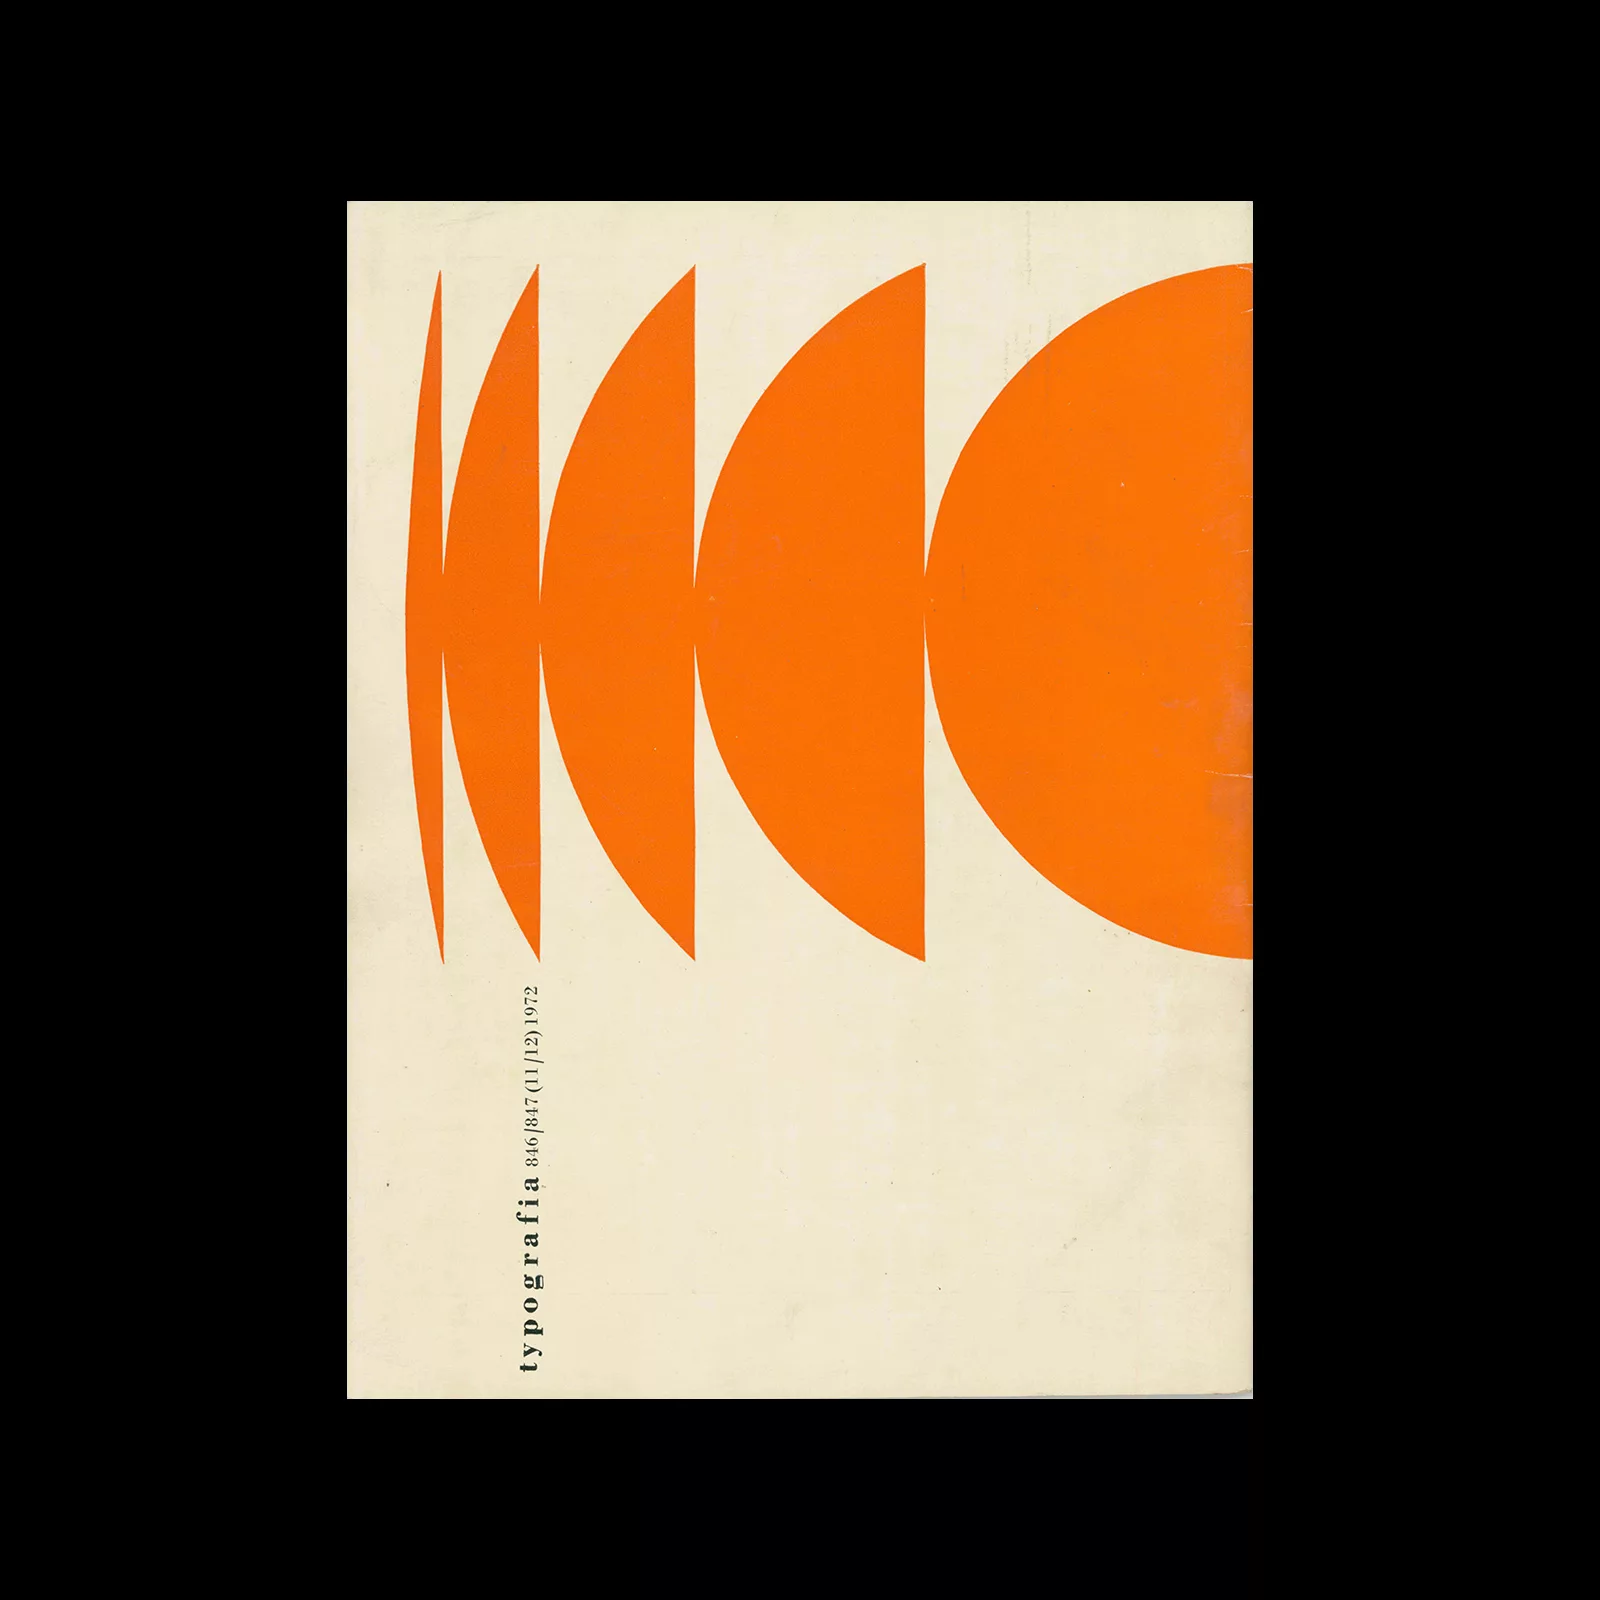 Typografia, ročník 75, 11-12, 1972. Back Cover design by Jan Urbánek